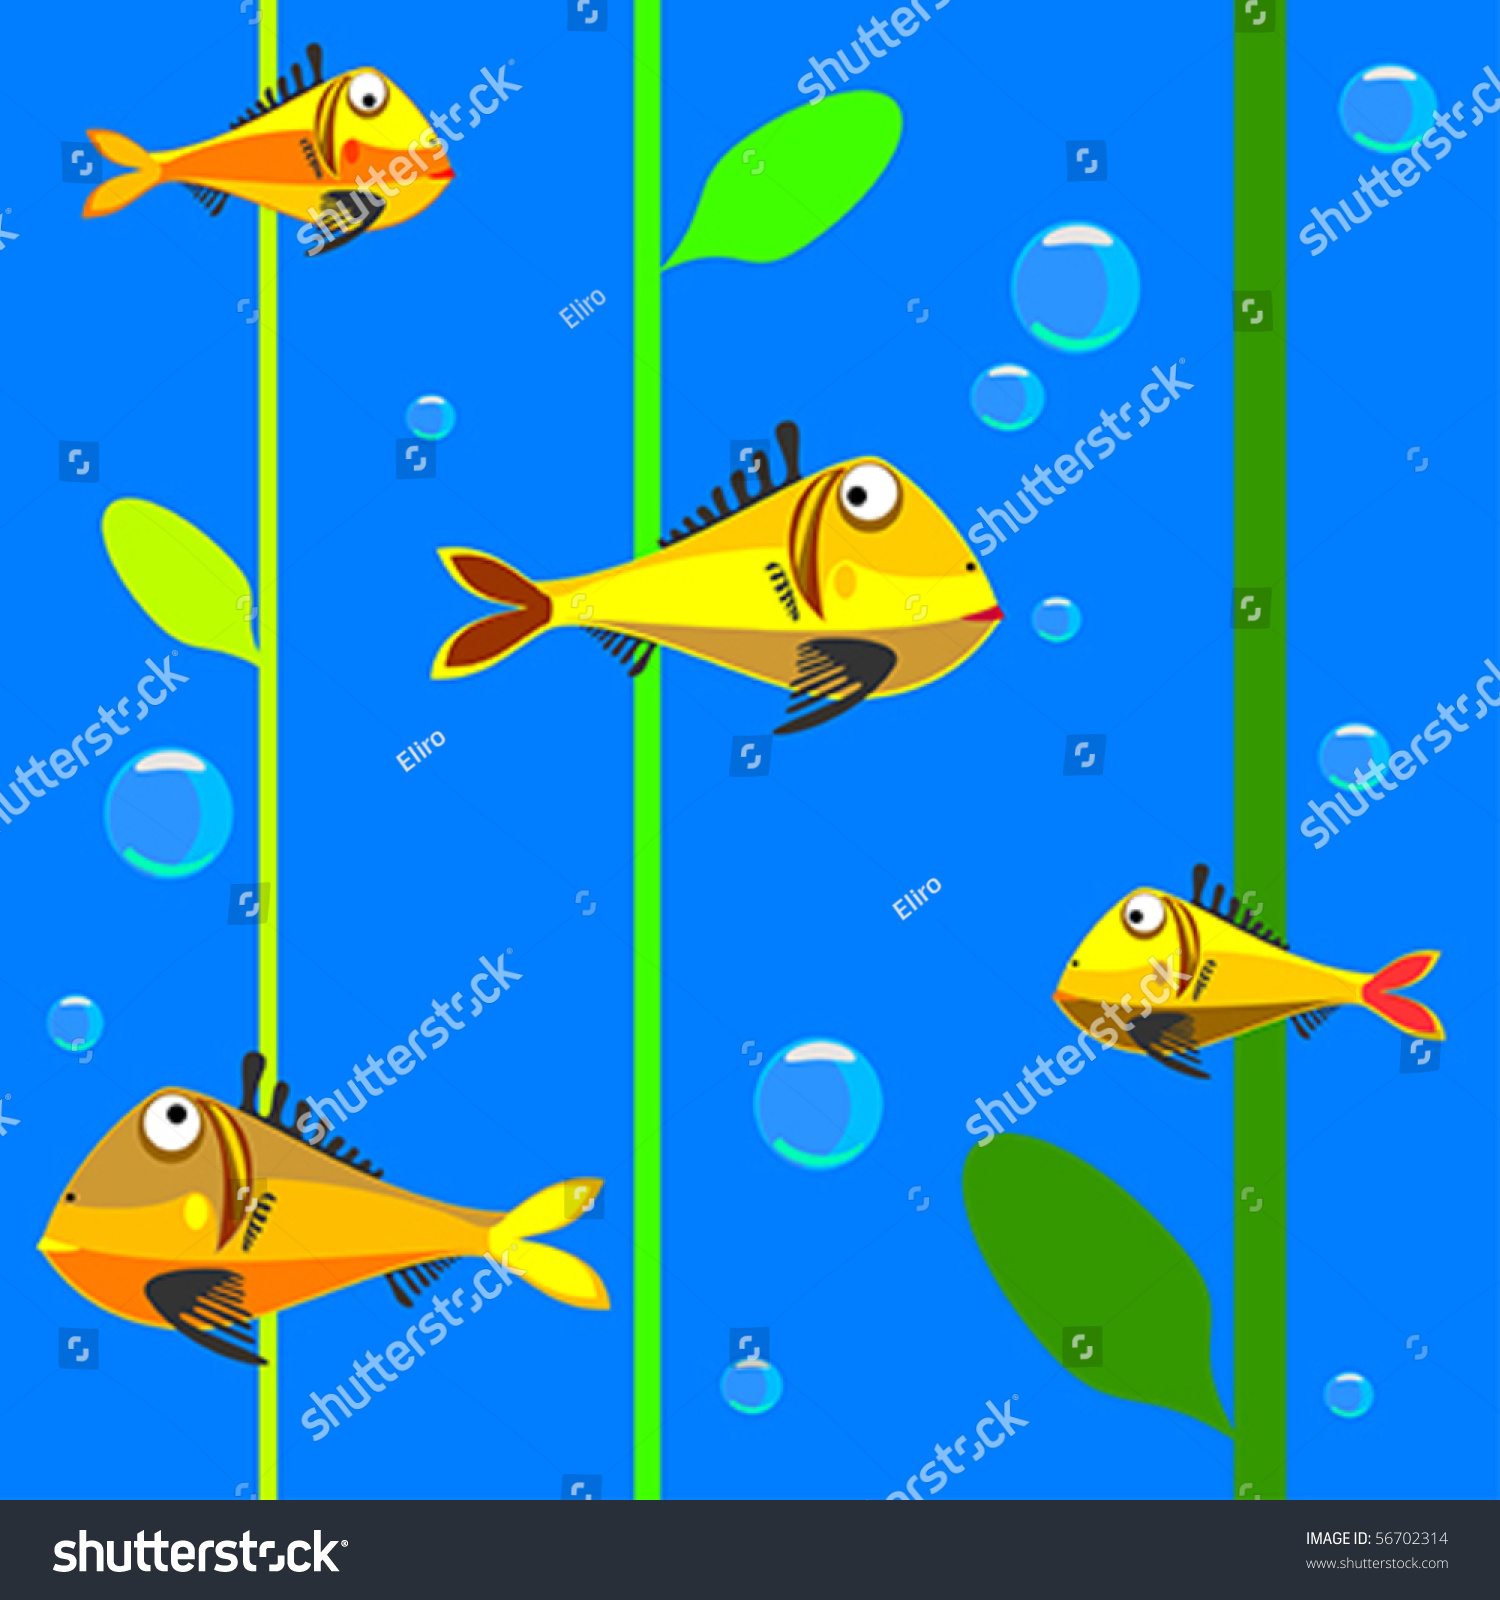 Underwater Cartoon Tiling Scene Stock Vector Illustration 56702314